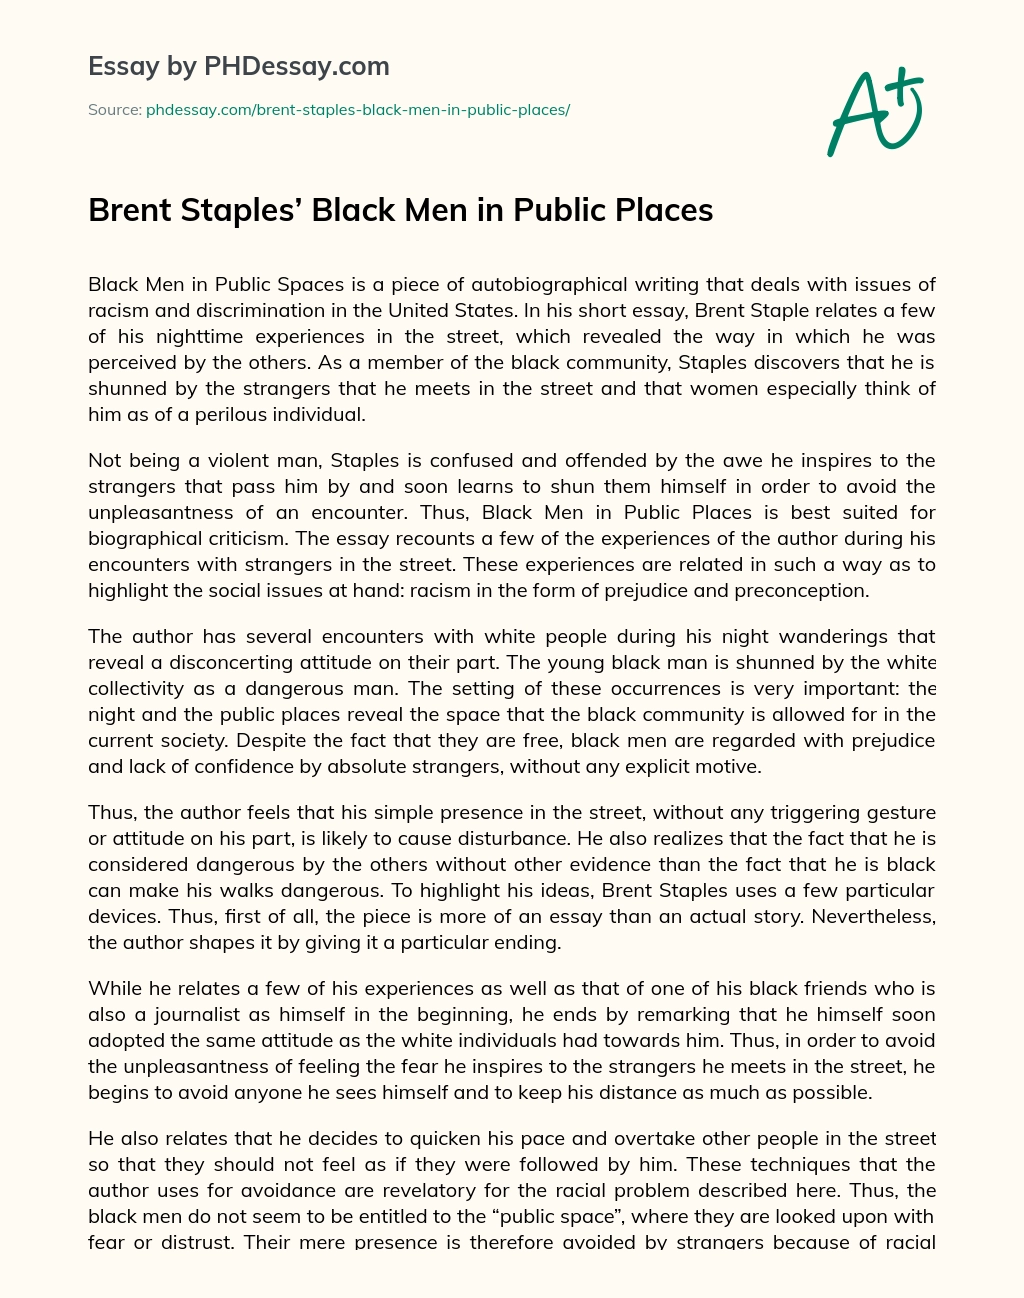 Brent Staples’ Black Men in Public Places essay